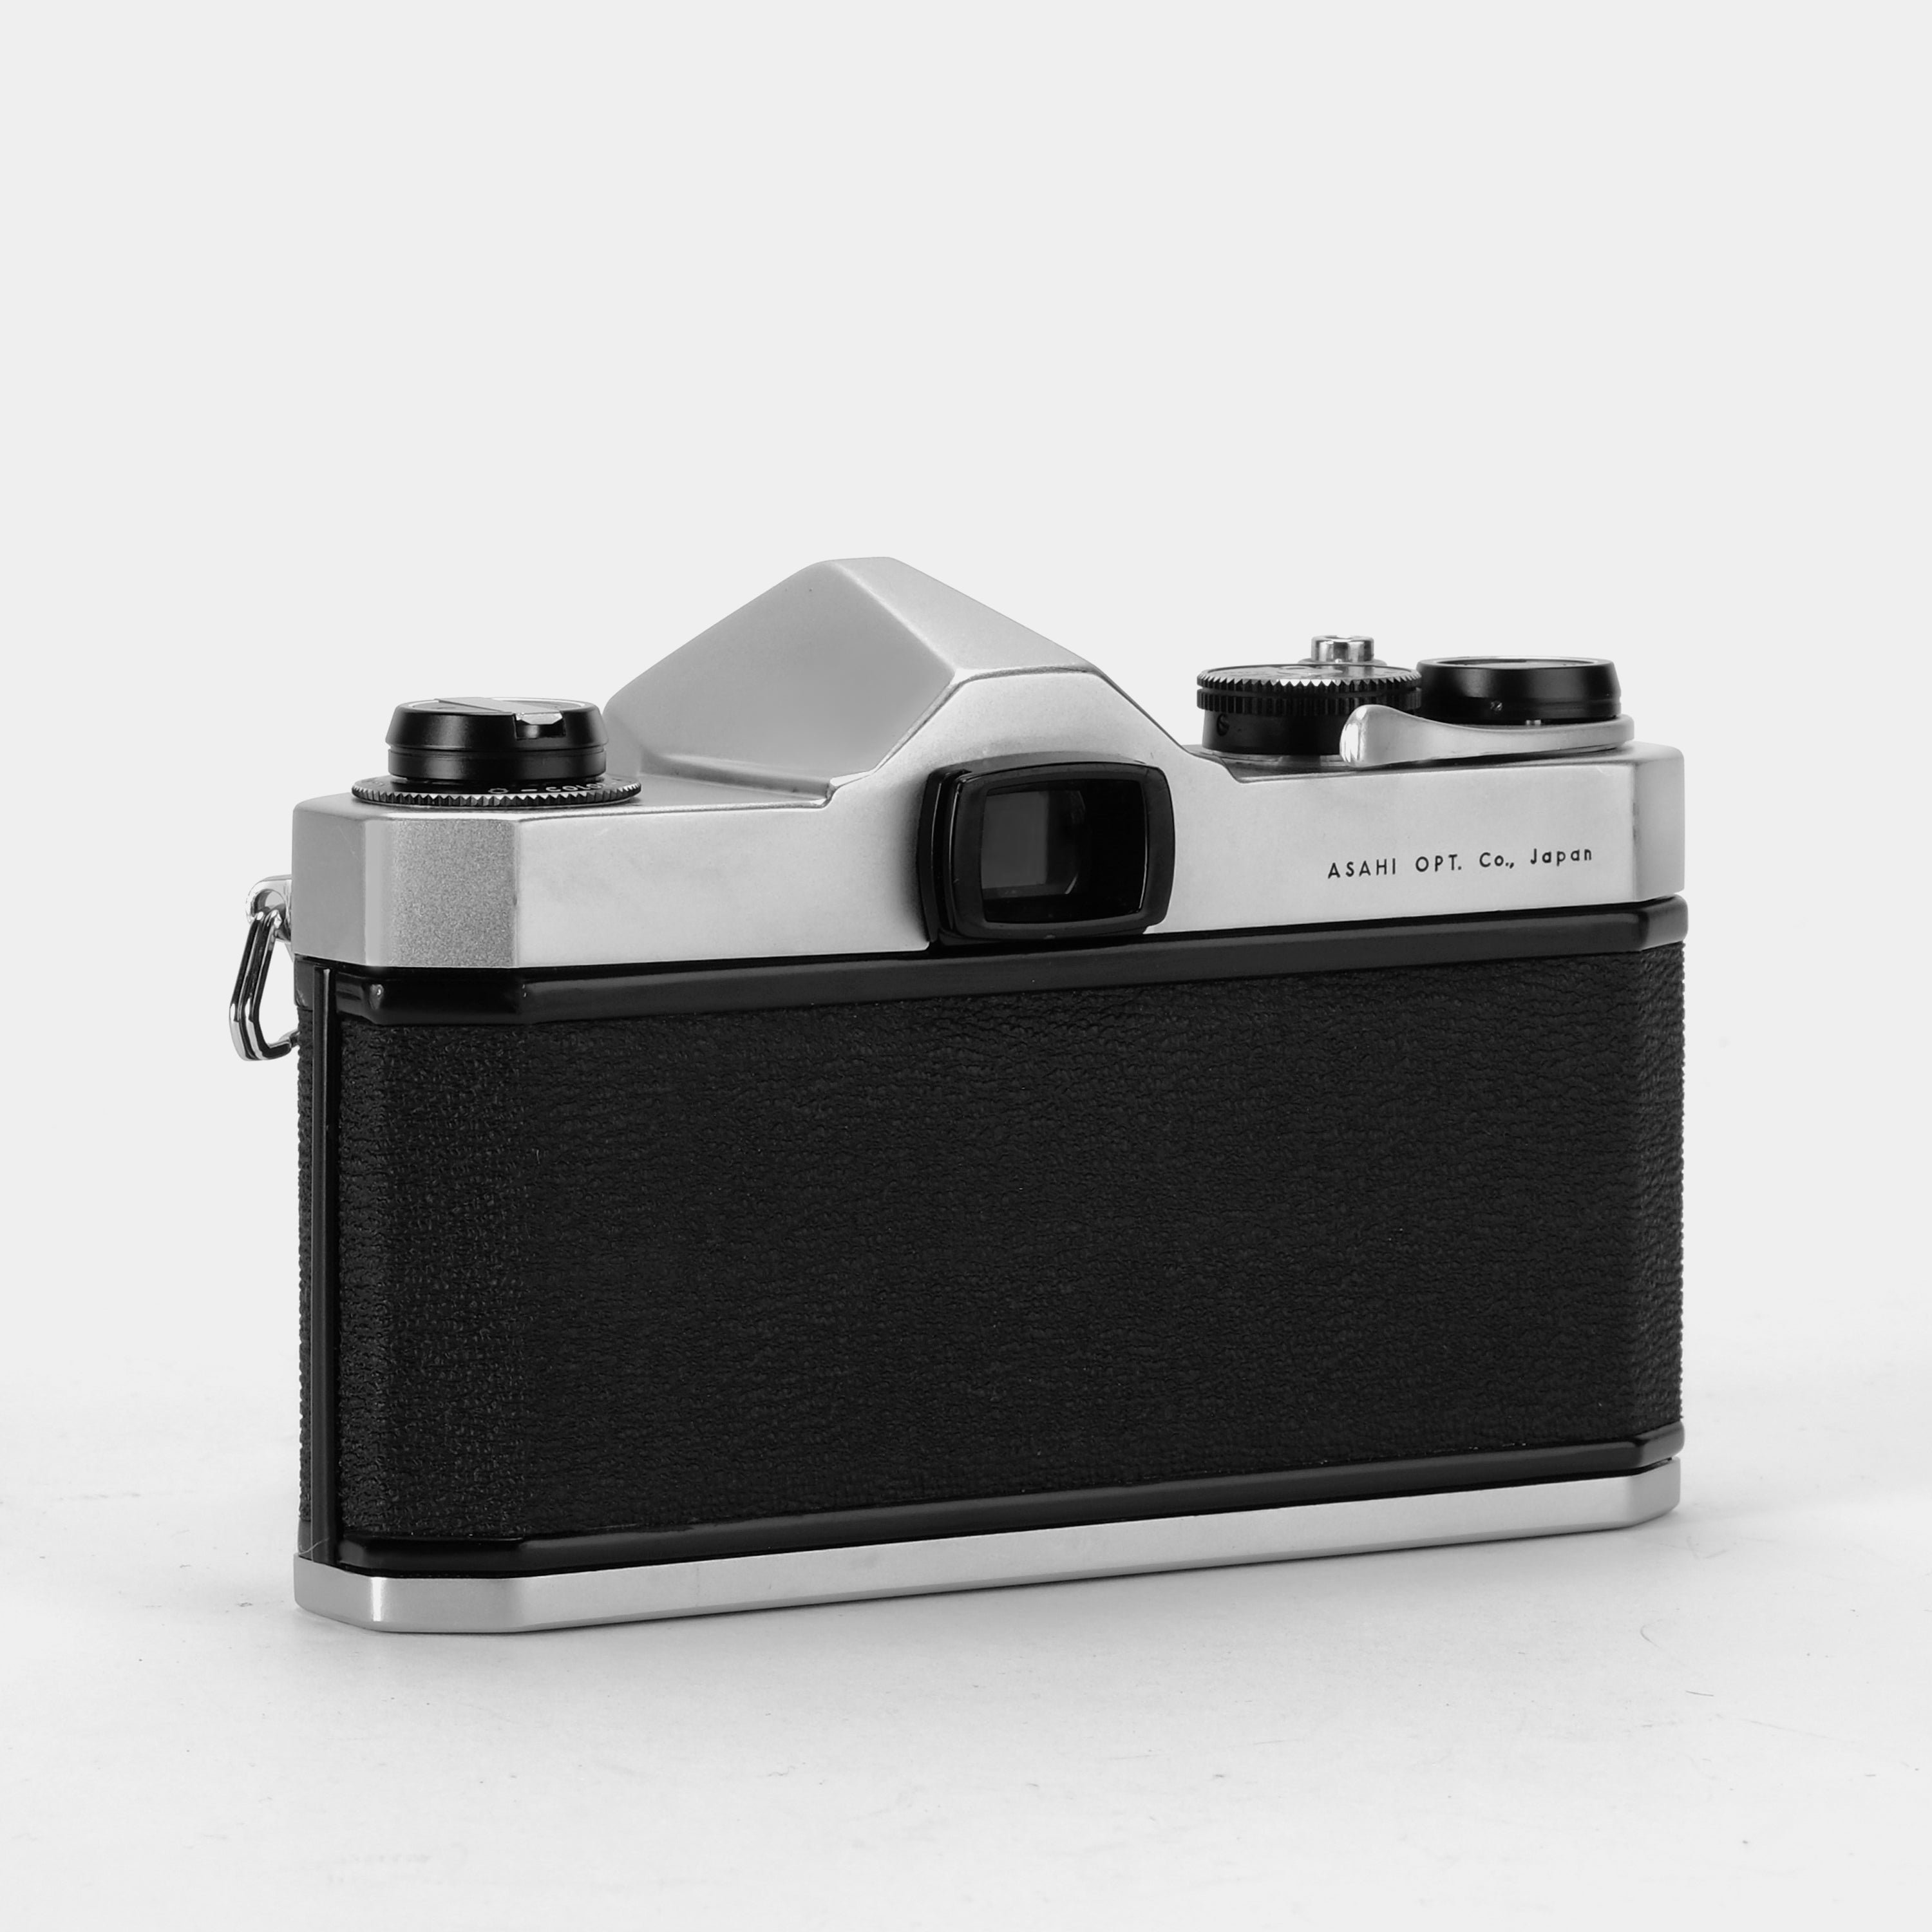 Honeywell Pentax Spotmatic 35mm SLR Film Camera